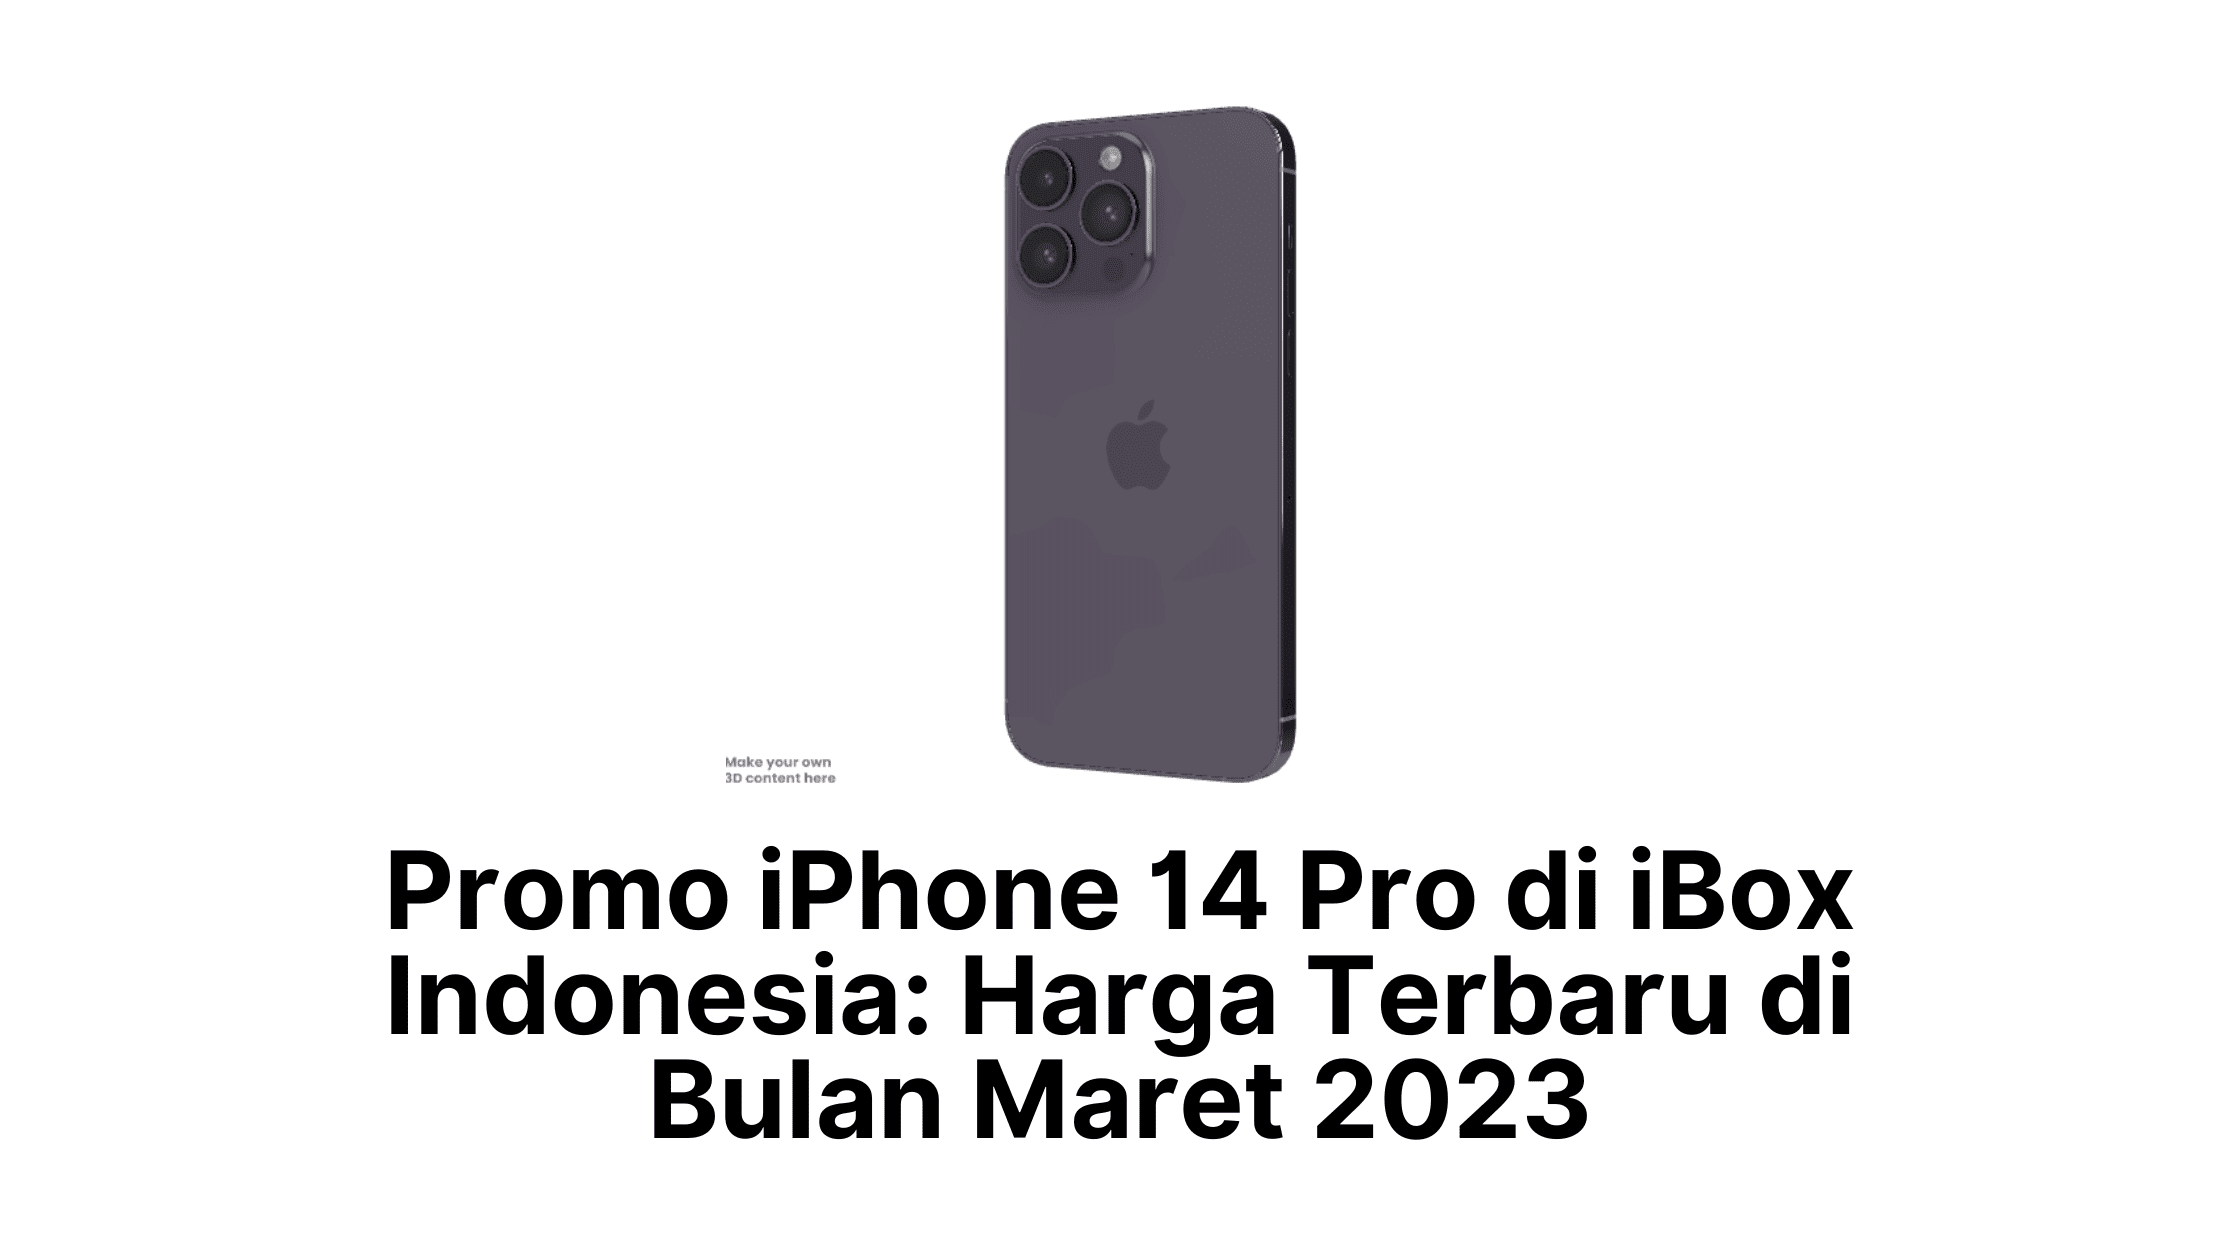 Promo iPhone 14 Pro di iBox Indonesia Harga Terbaru di Bulan Maret 2023